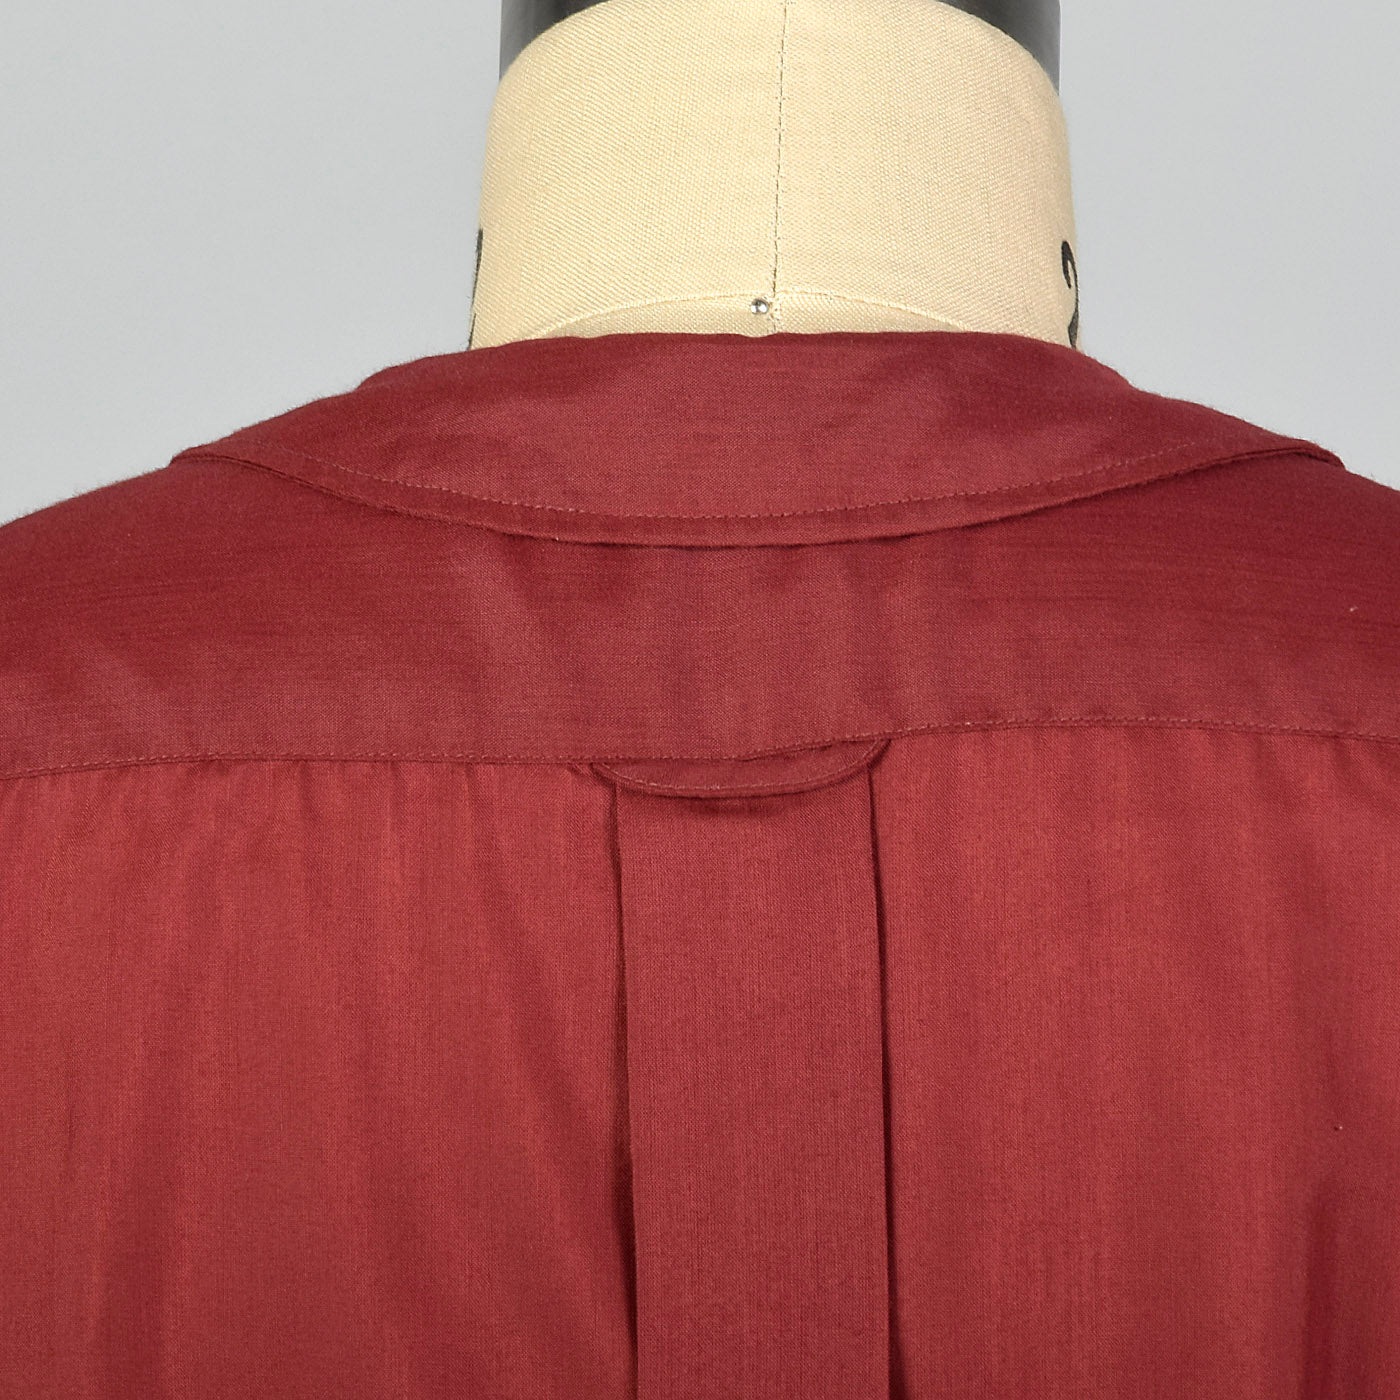 1960s Burgundy Shirt Dress